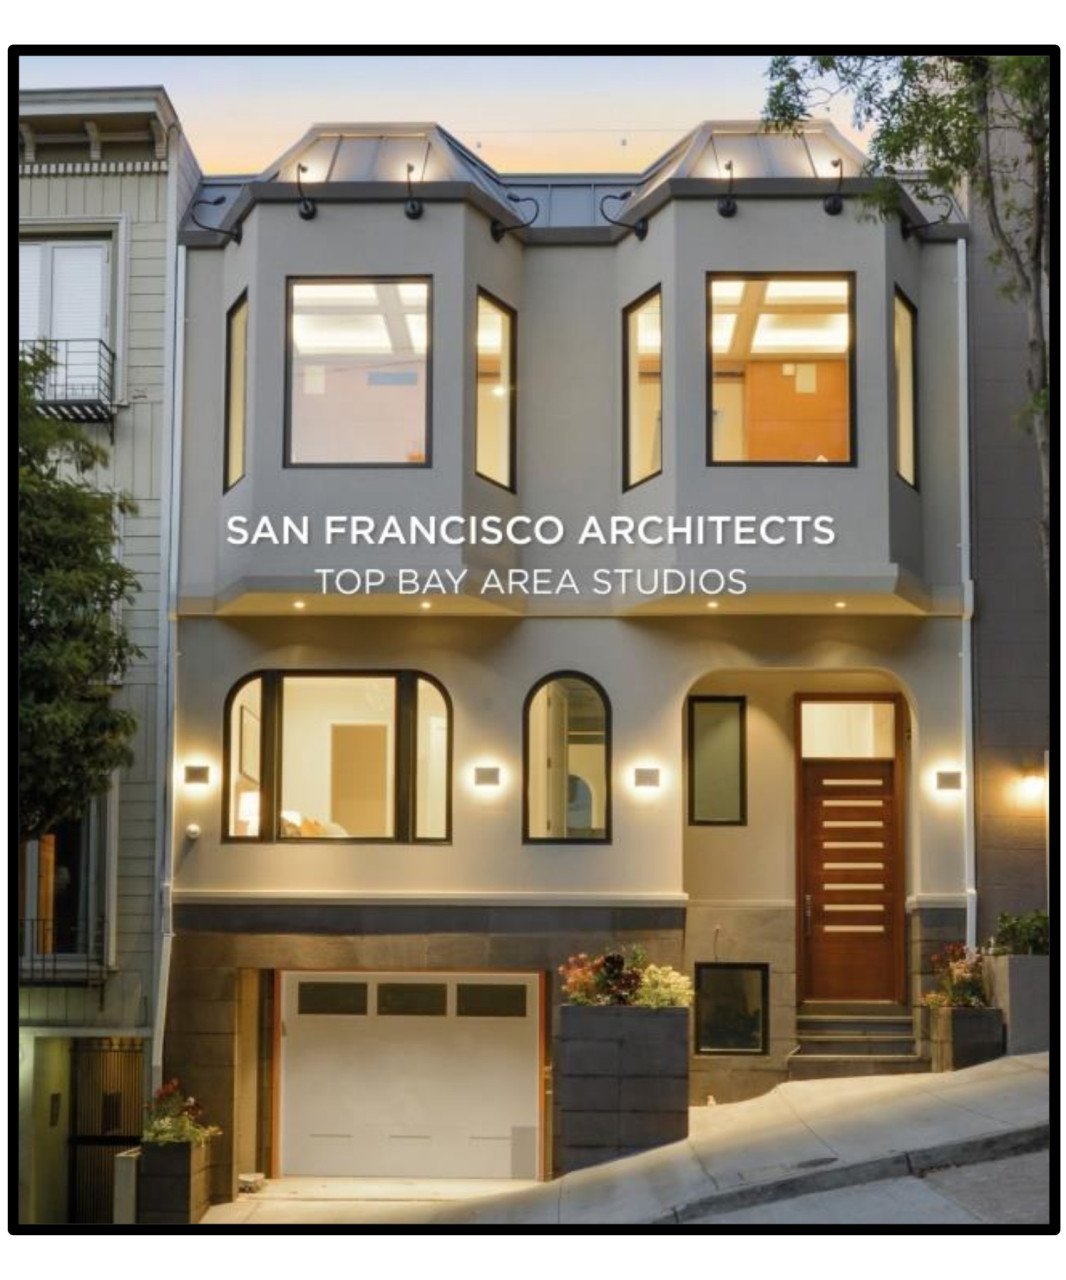 Top Bay Area Studios; San Francisco Architects